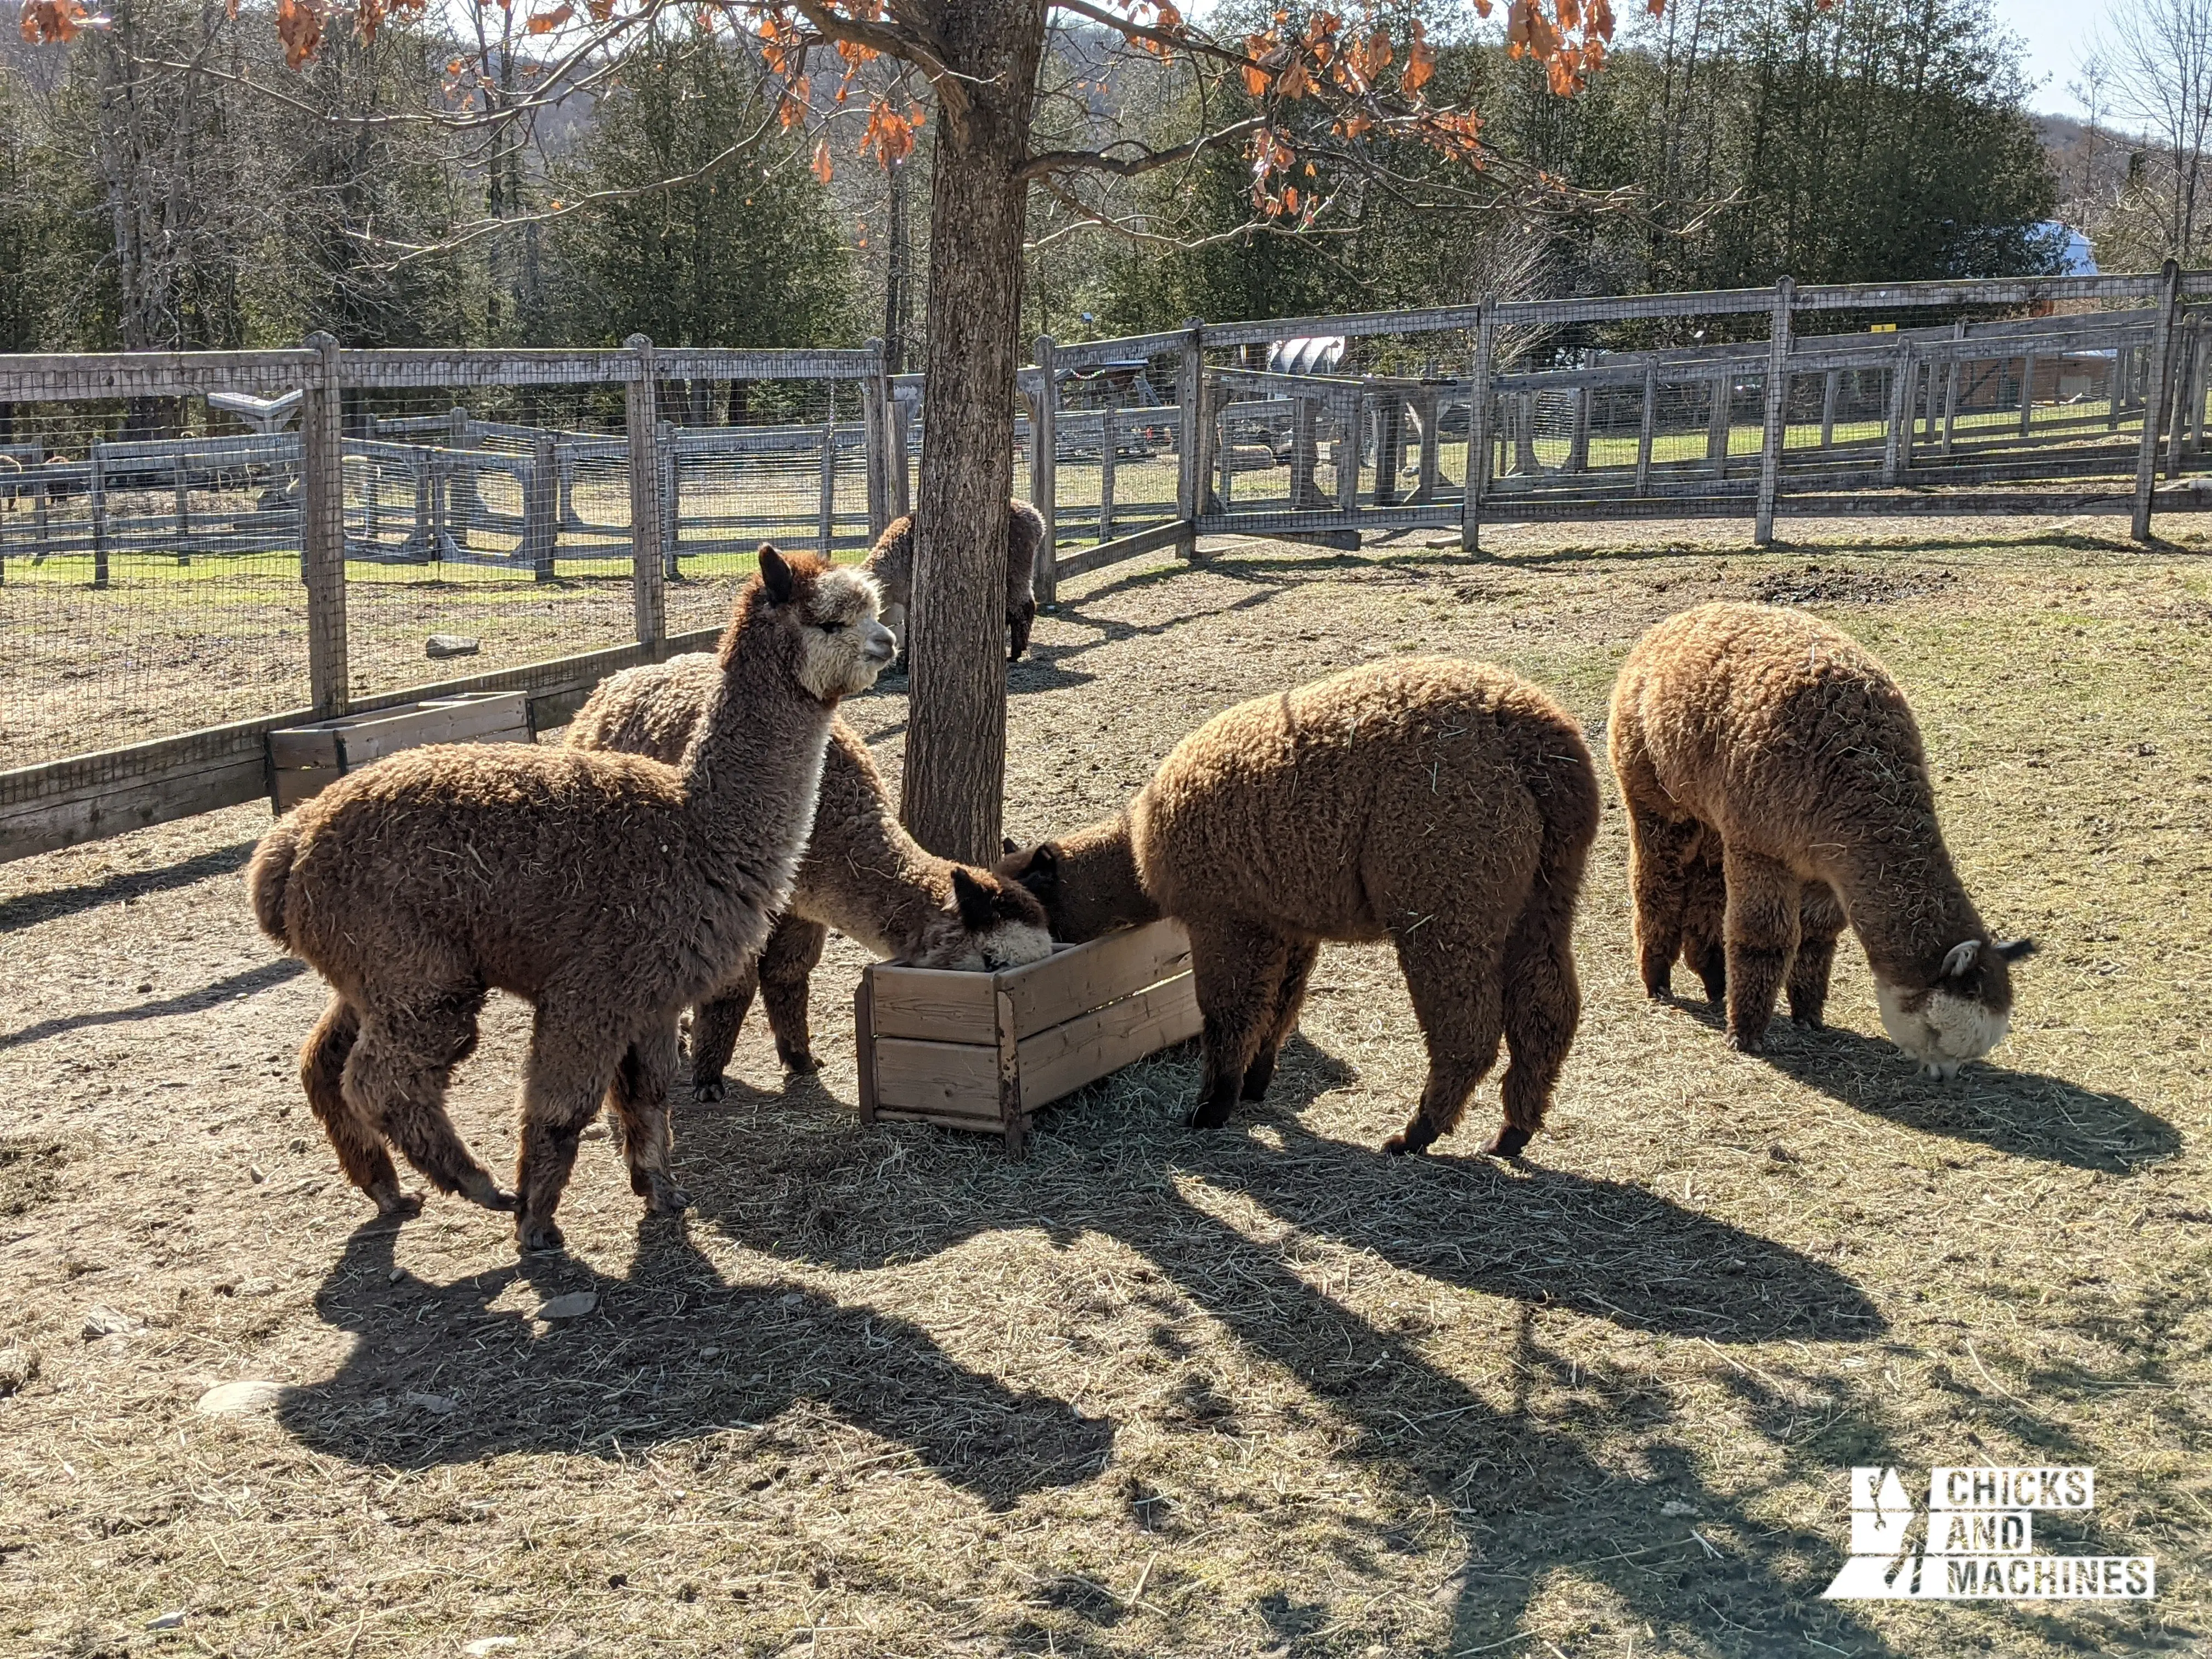 A visit to our friends the alpacas!